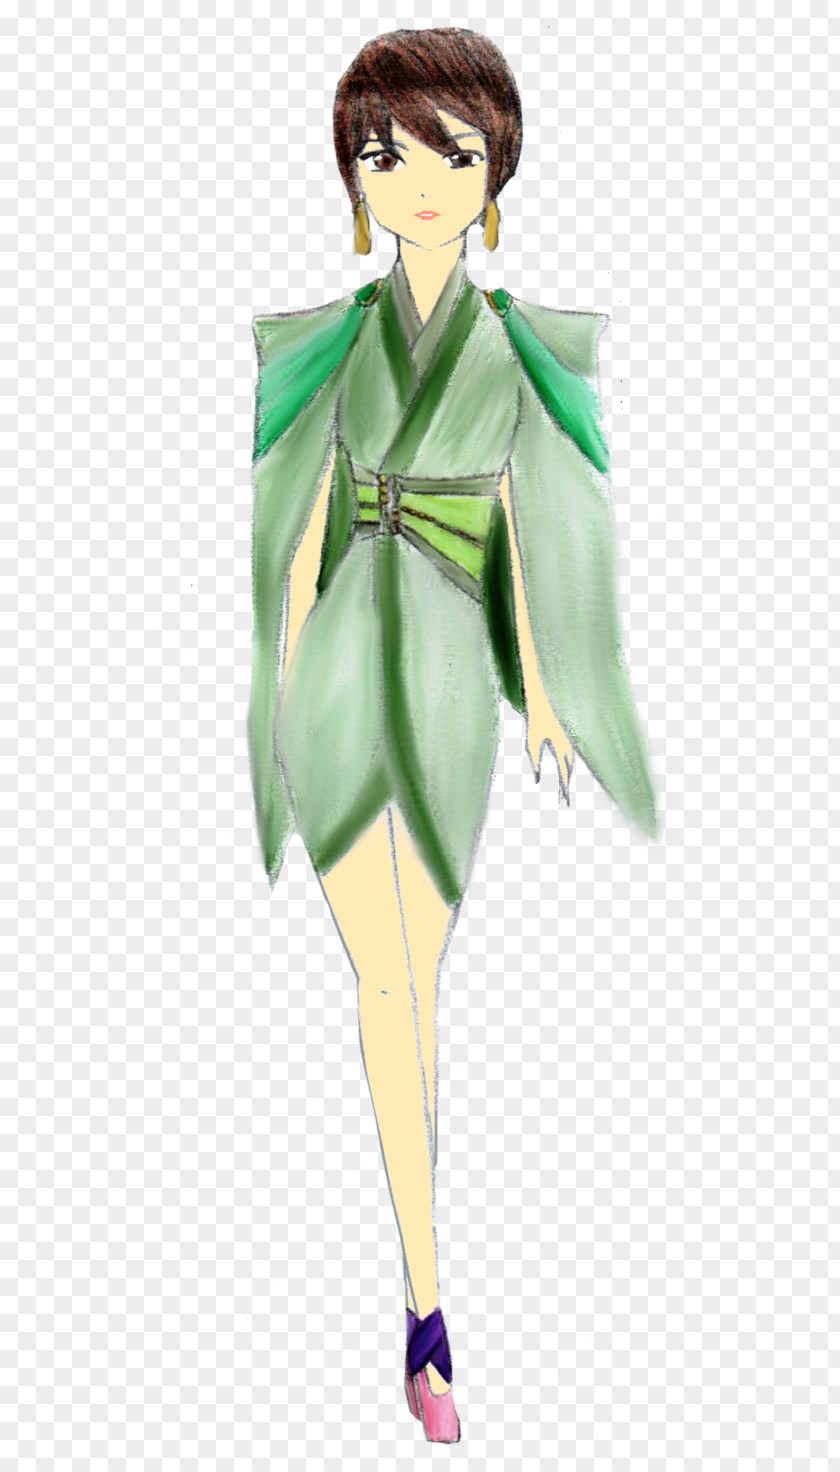 Green Runway Fashion Illustration Design Costume PNG